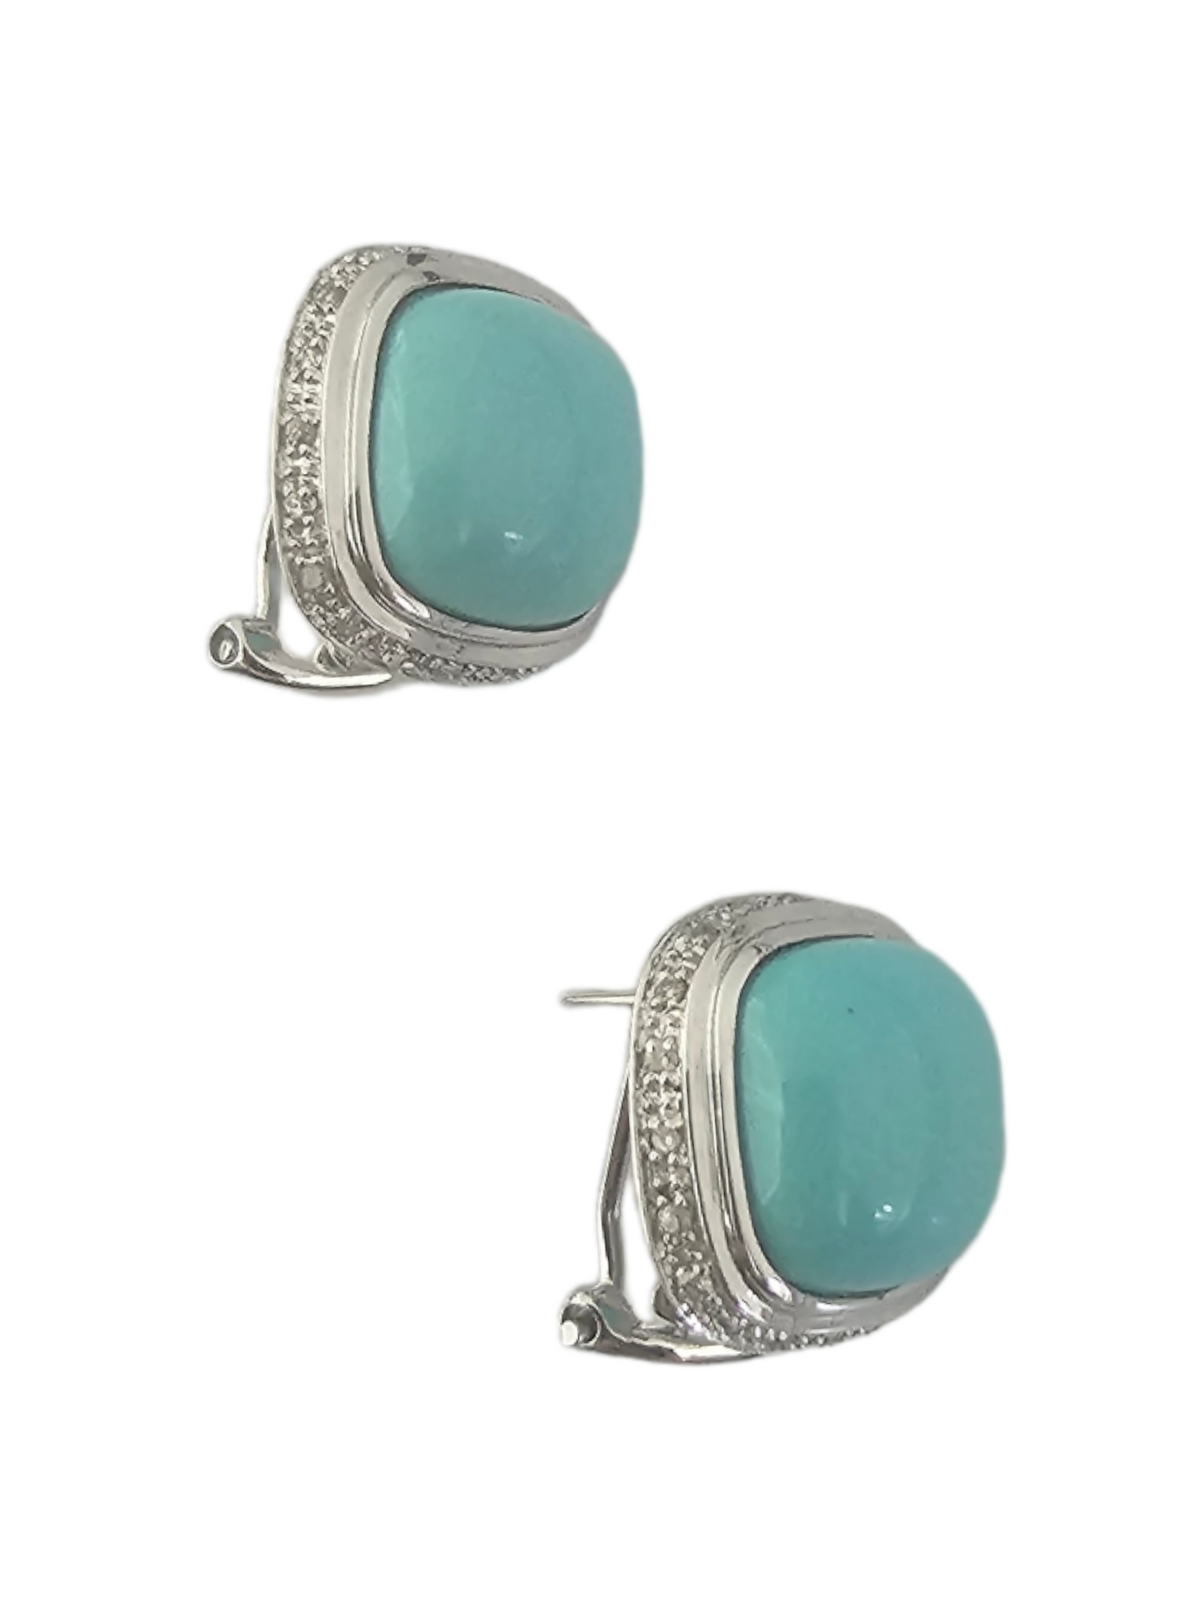 Sleeping Beauty Turquoise and Diamond Earrings, 14kt White Gold stud earrings